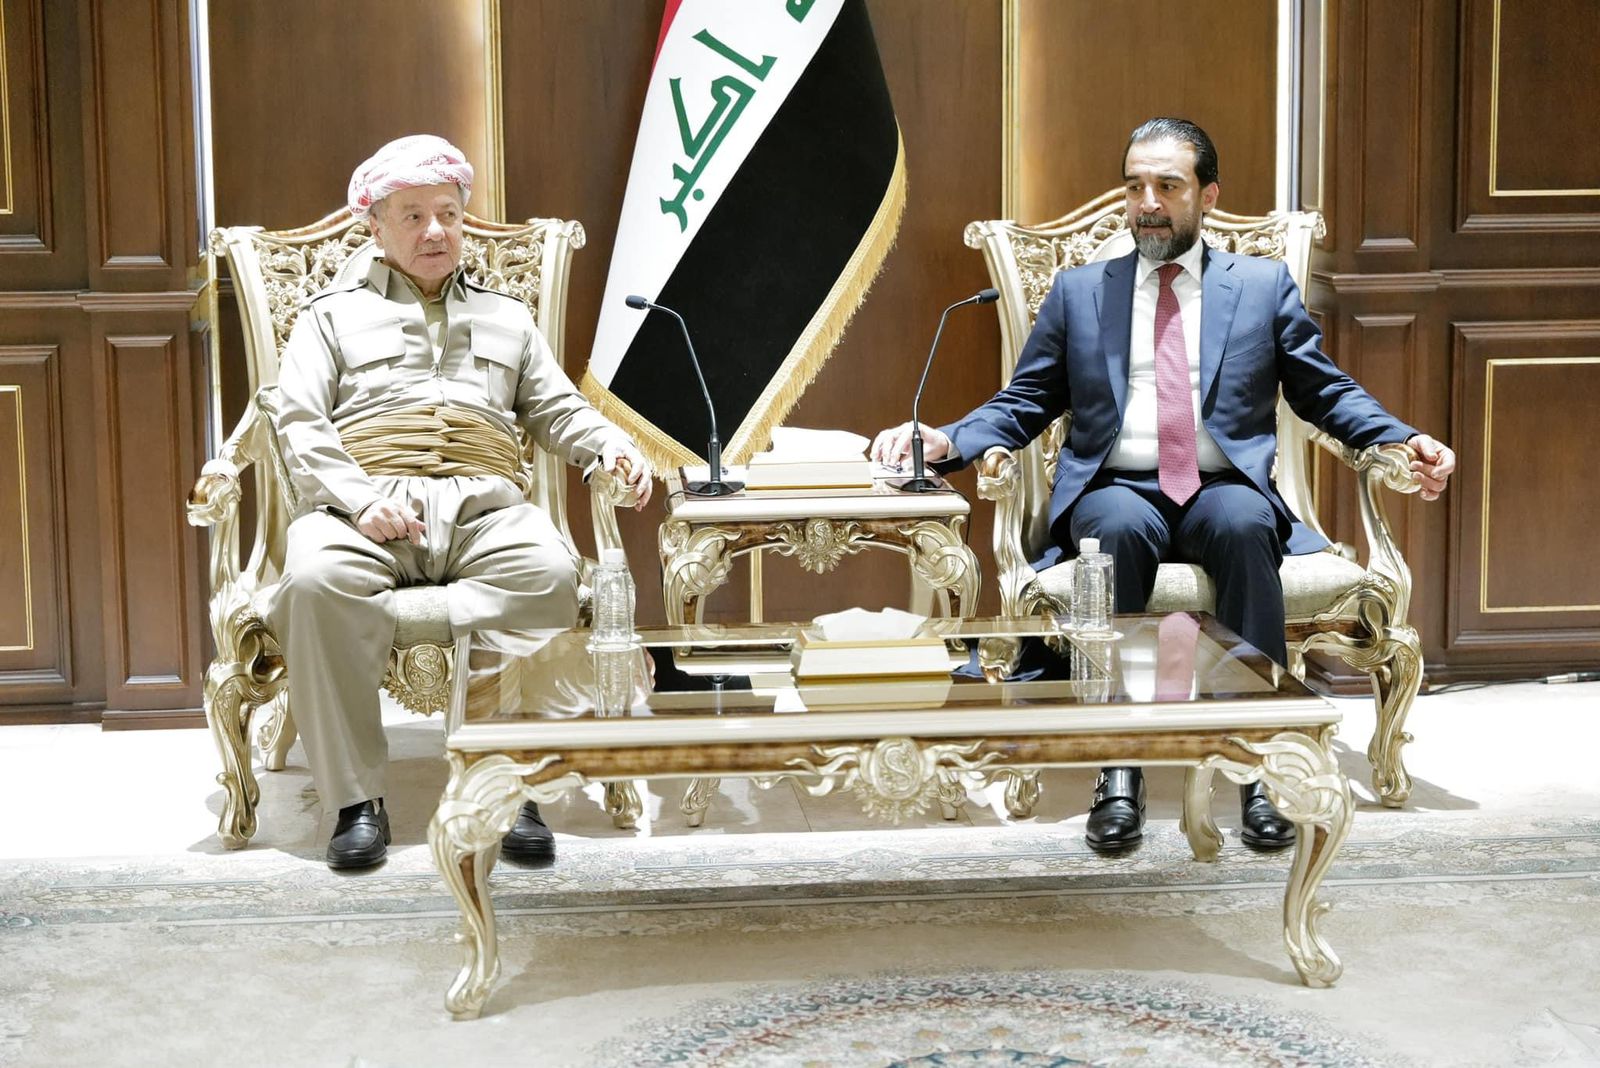 Leader Masoud Barzani discusses political developments with Al-Halbousi in Baghdad